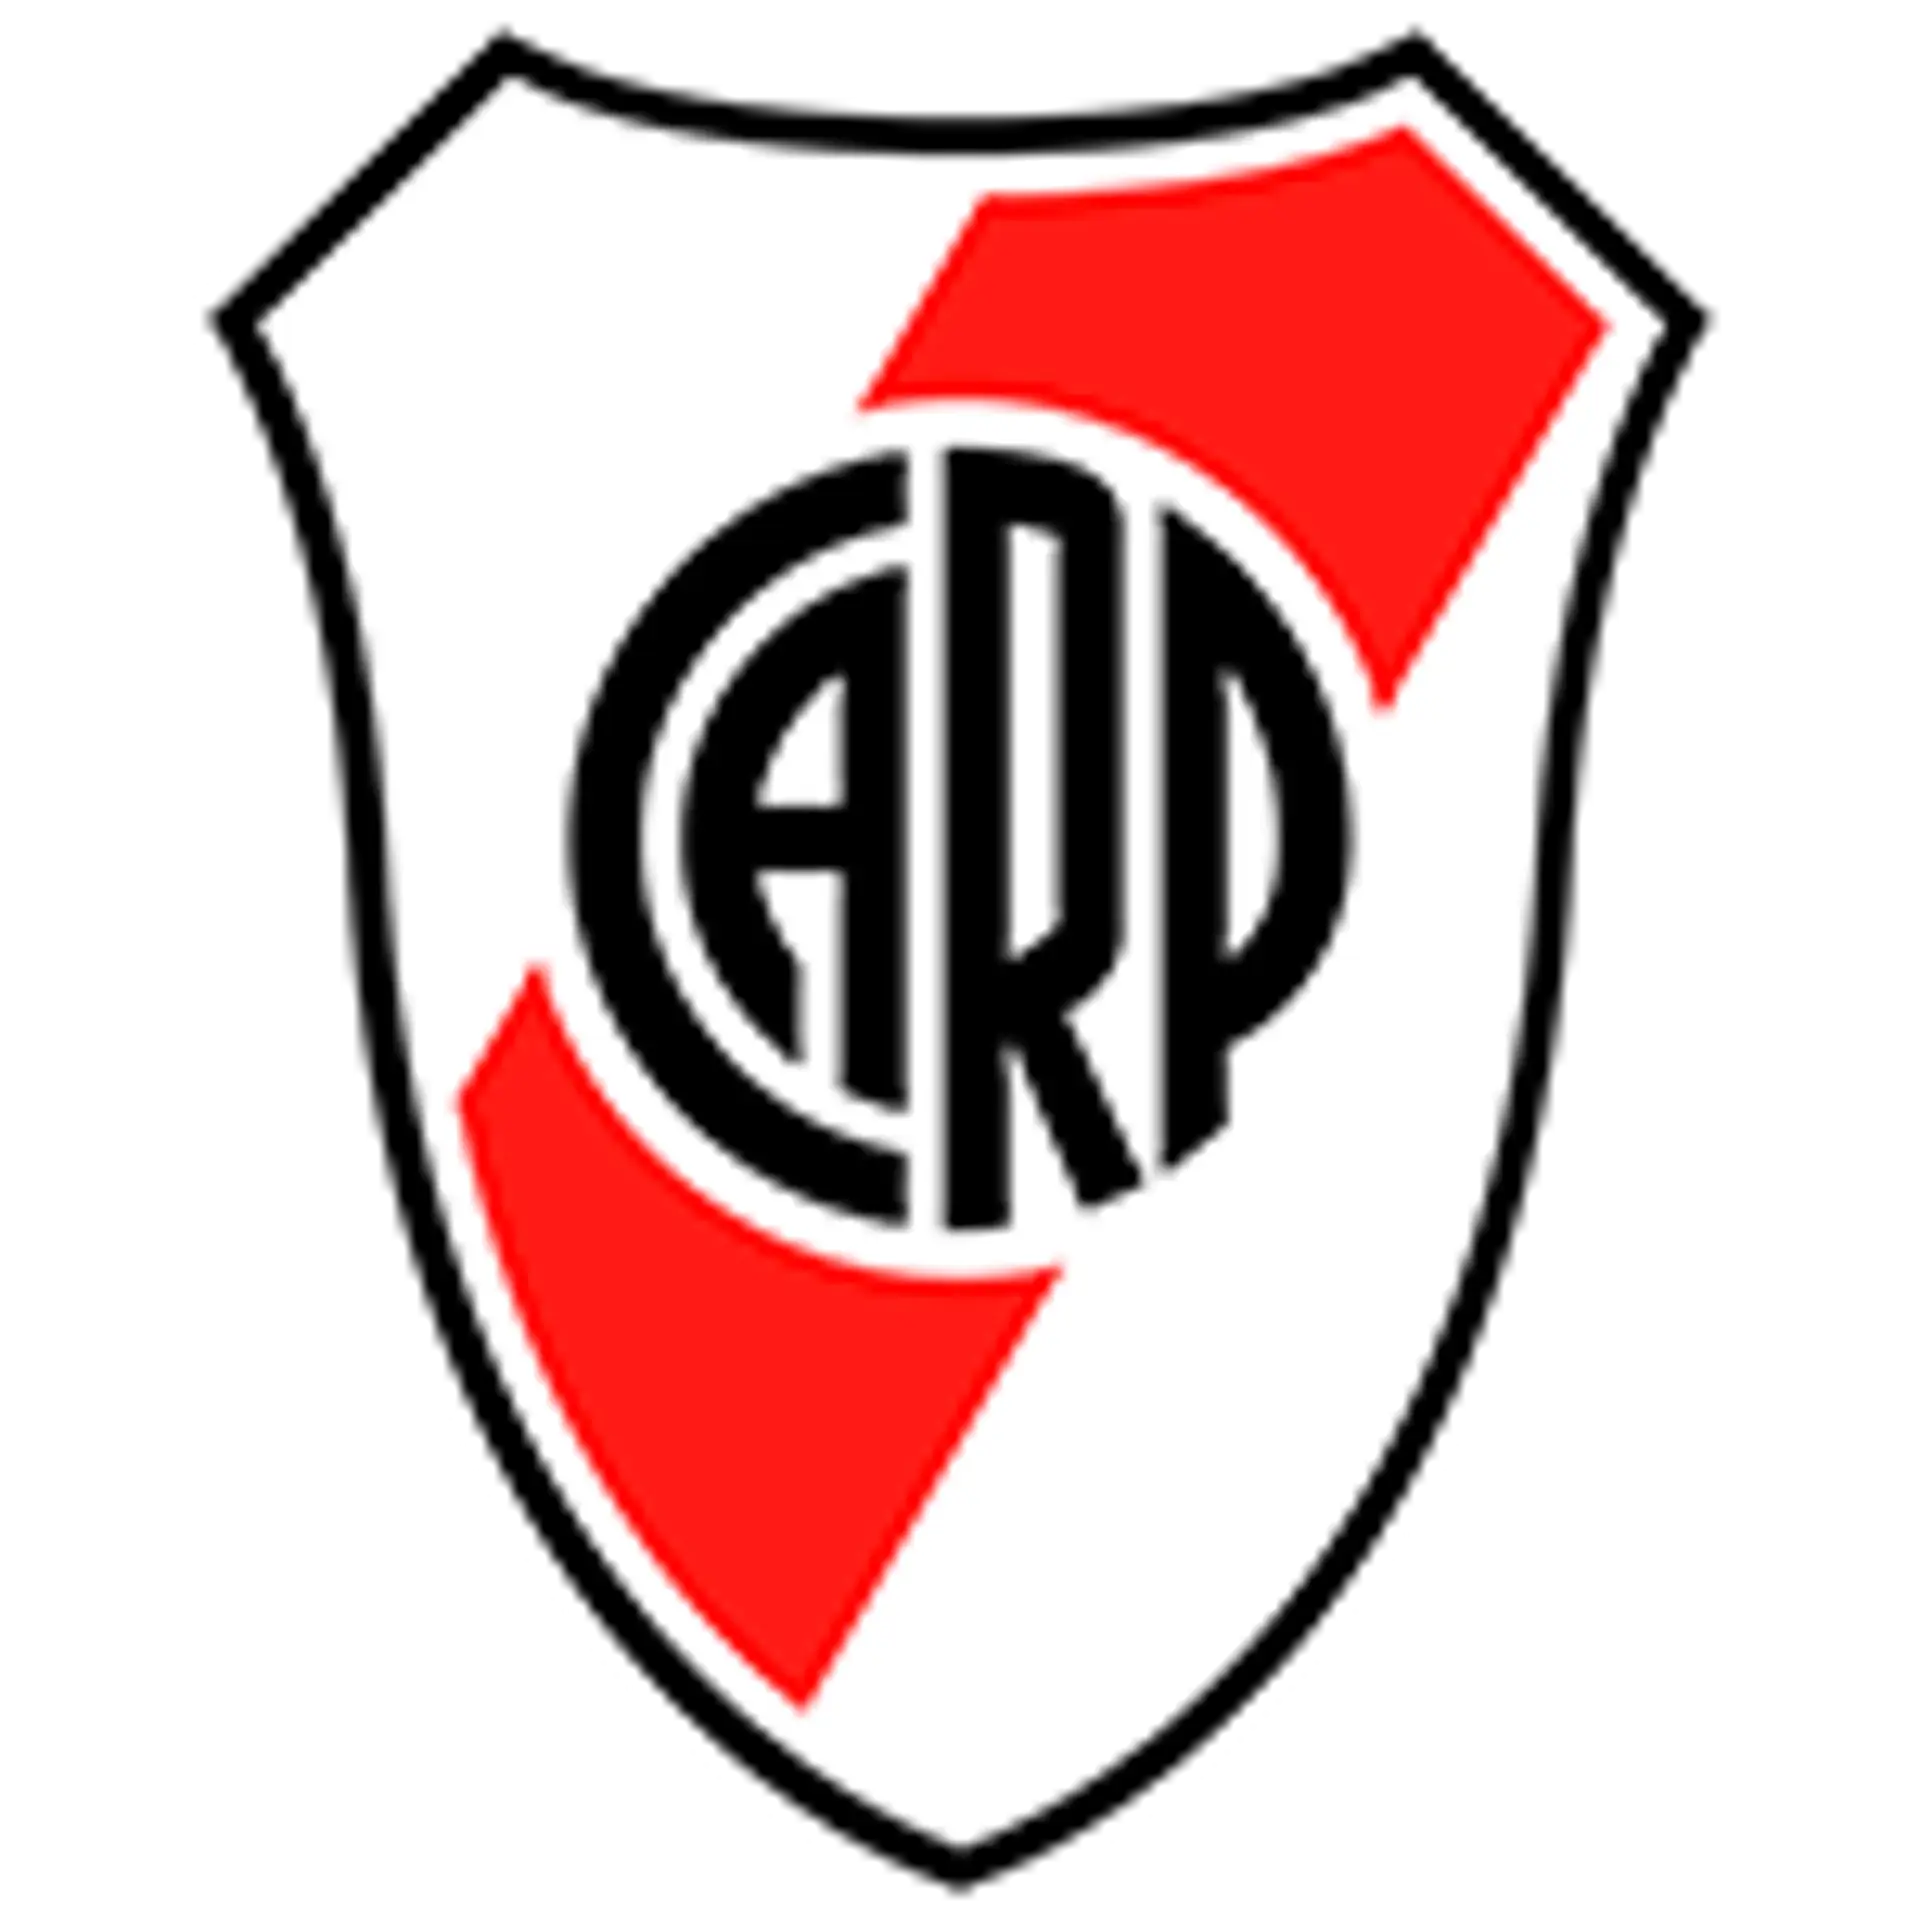 CA River Plate (Arg) vs Fluminense RJ: Live Score, Stream and H2H results  6/7/2023. Preview match CA River Plate (Arg) vs Fluminense RJ, team, start  time.